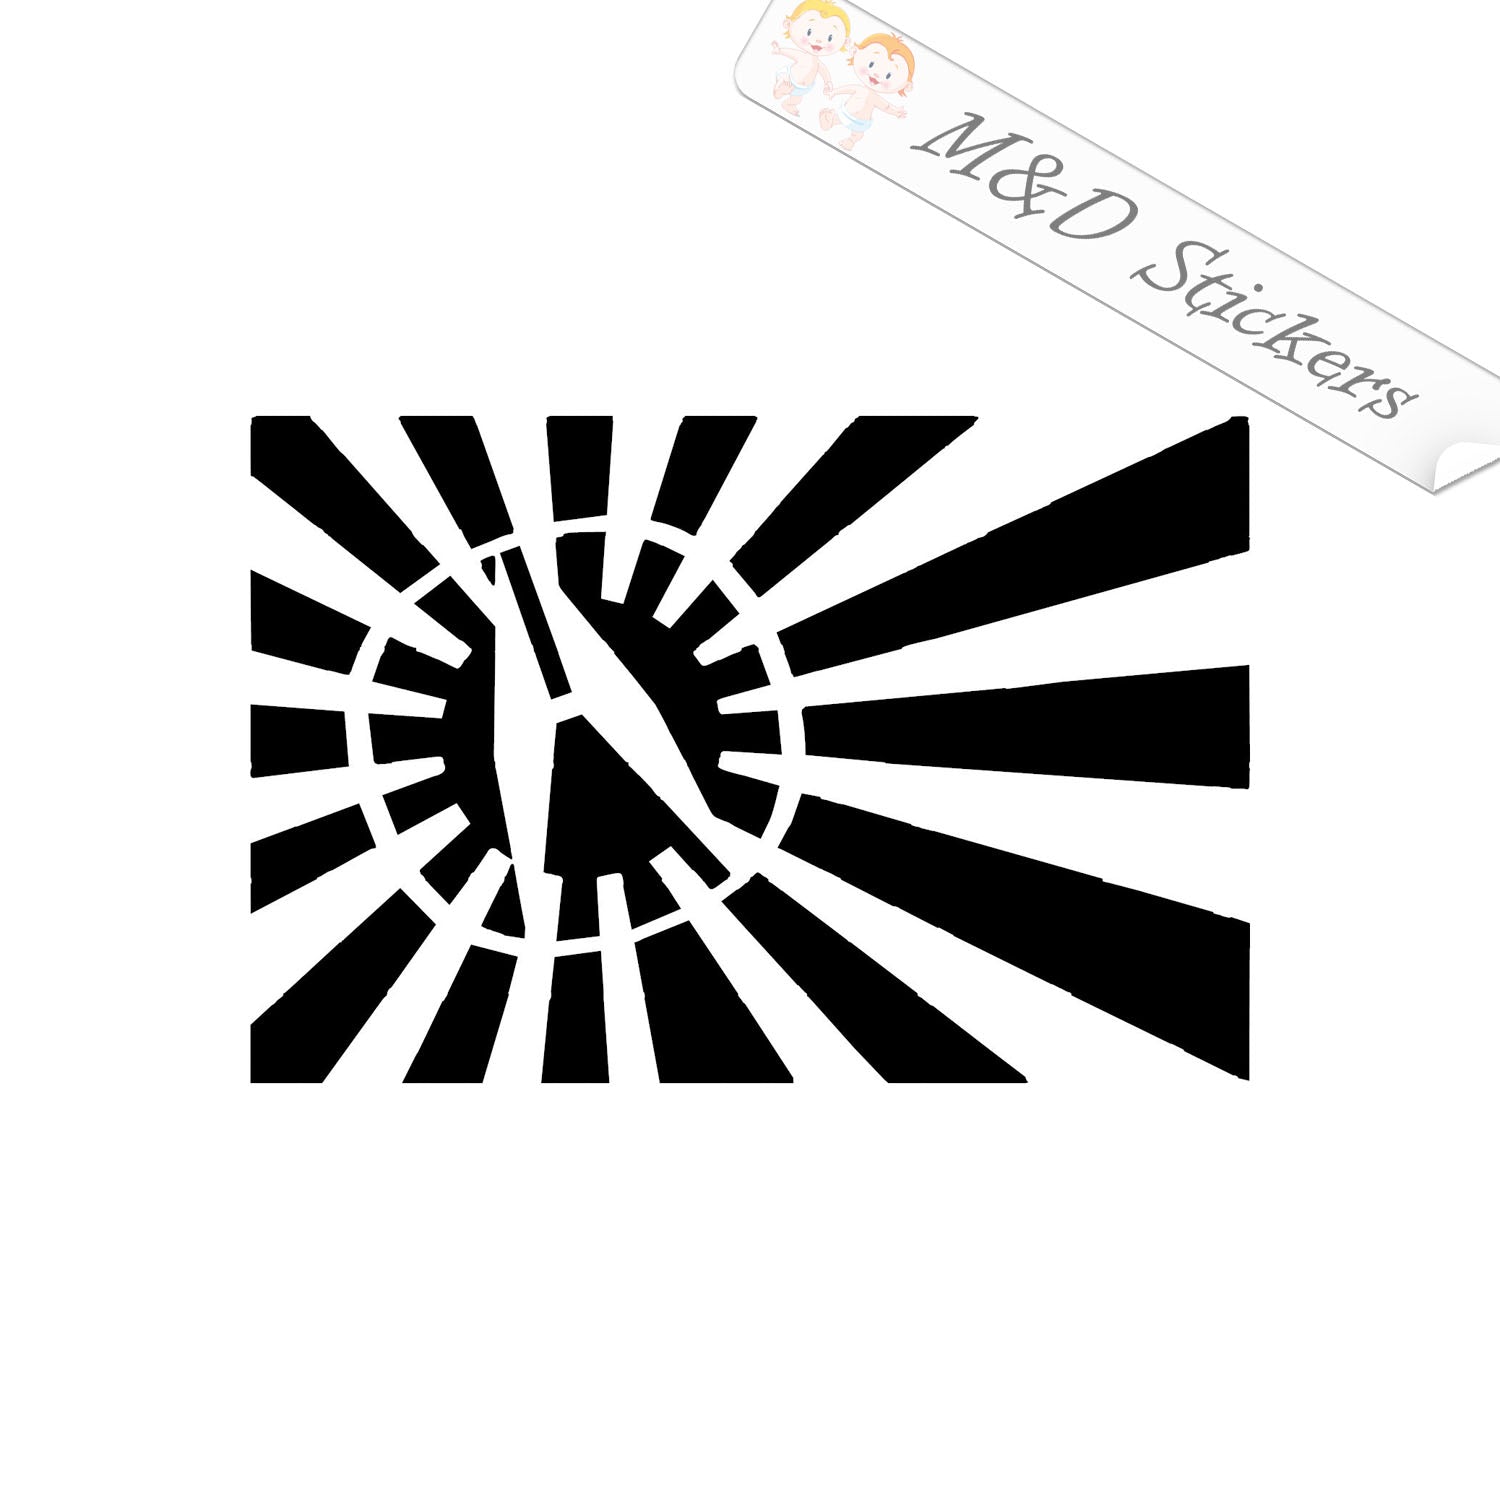 3.5 X 5 INCH STICKERS 2PC SICKSPEED DECAL RISING SUN JAPAN FLAG STICK –  Sickspeed